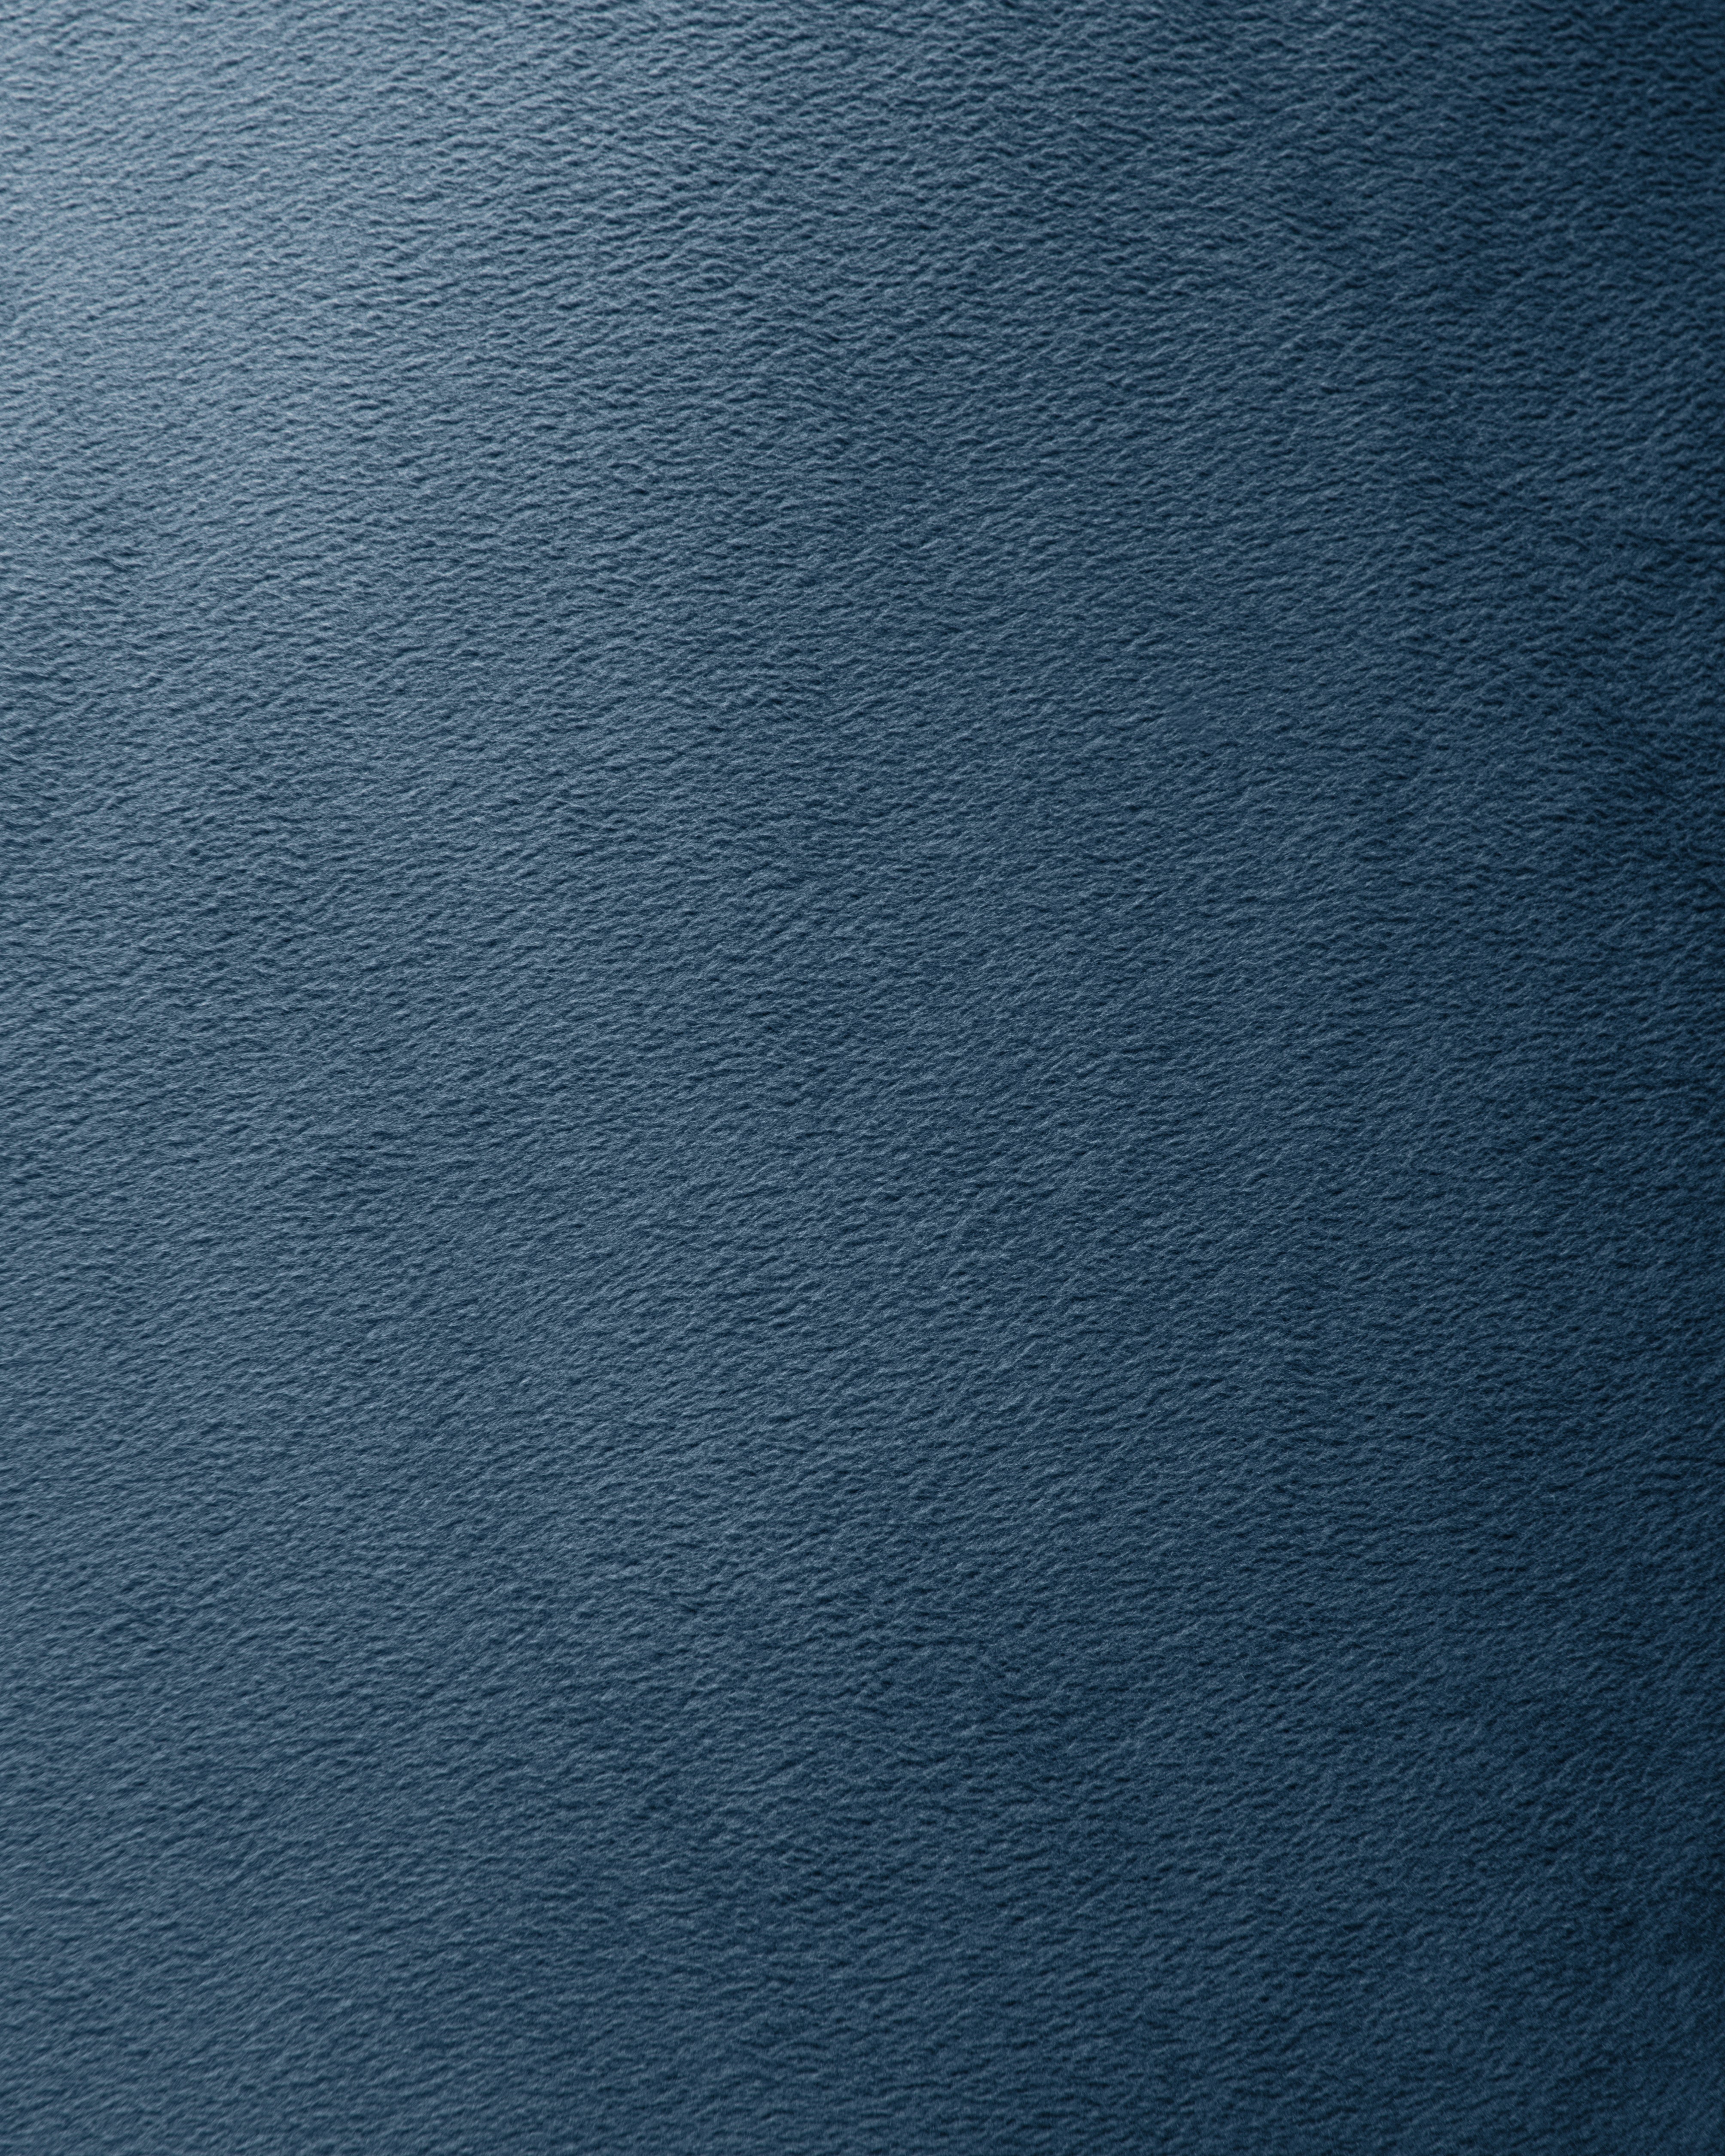 Sierkussen Velours Original Maritime Blue - 100% Polyester